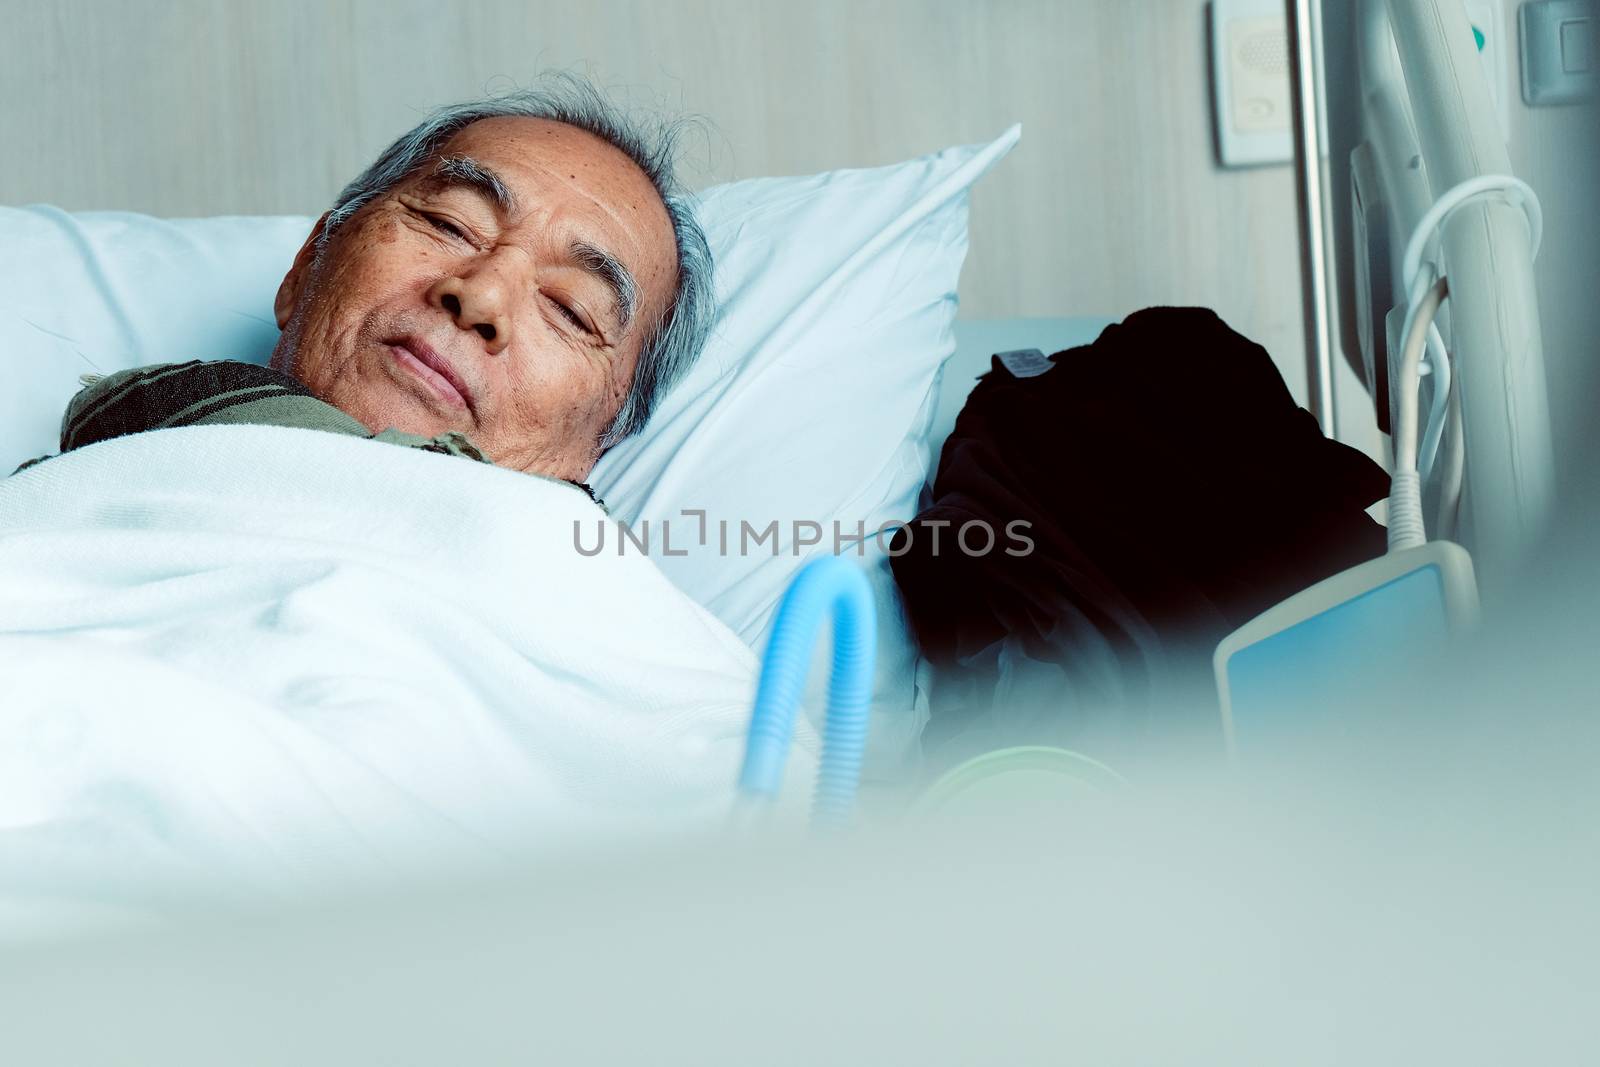 Elderly patients in hospital bed